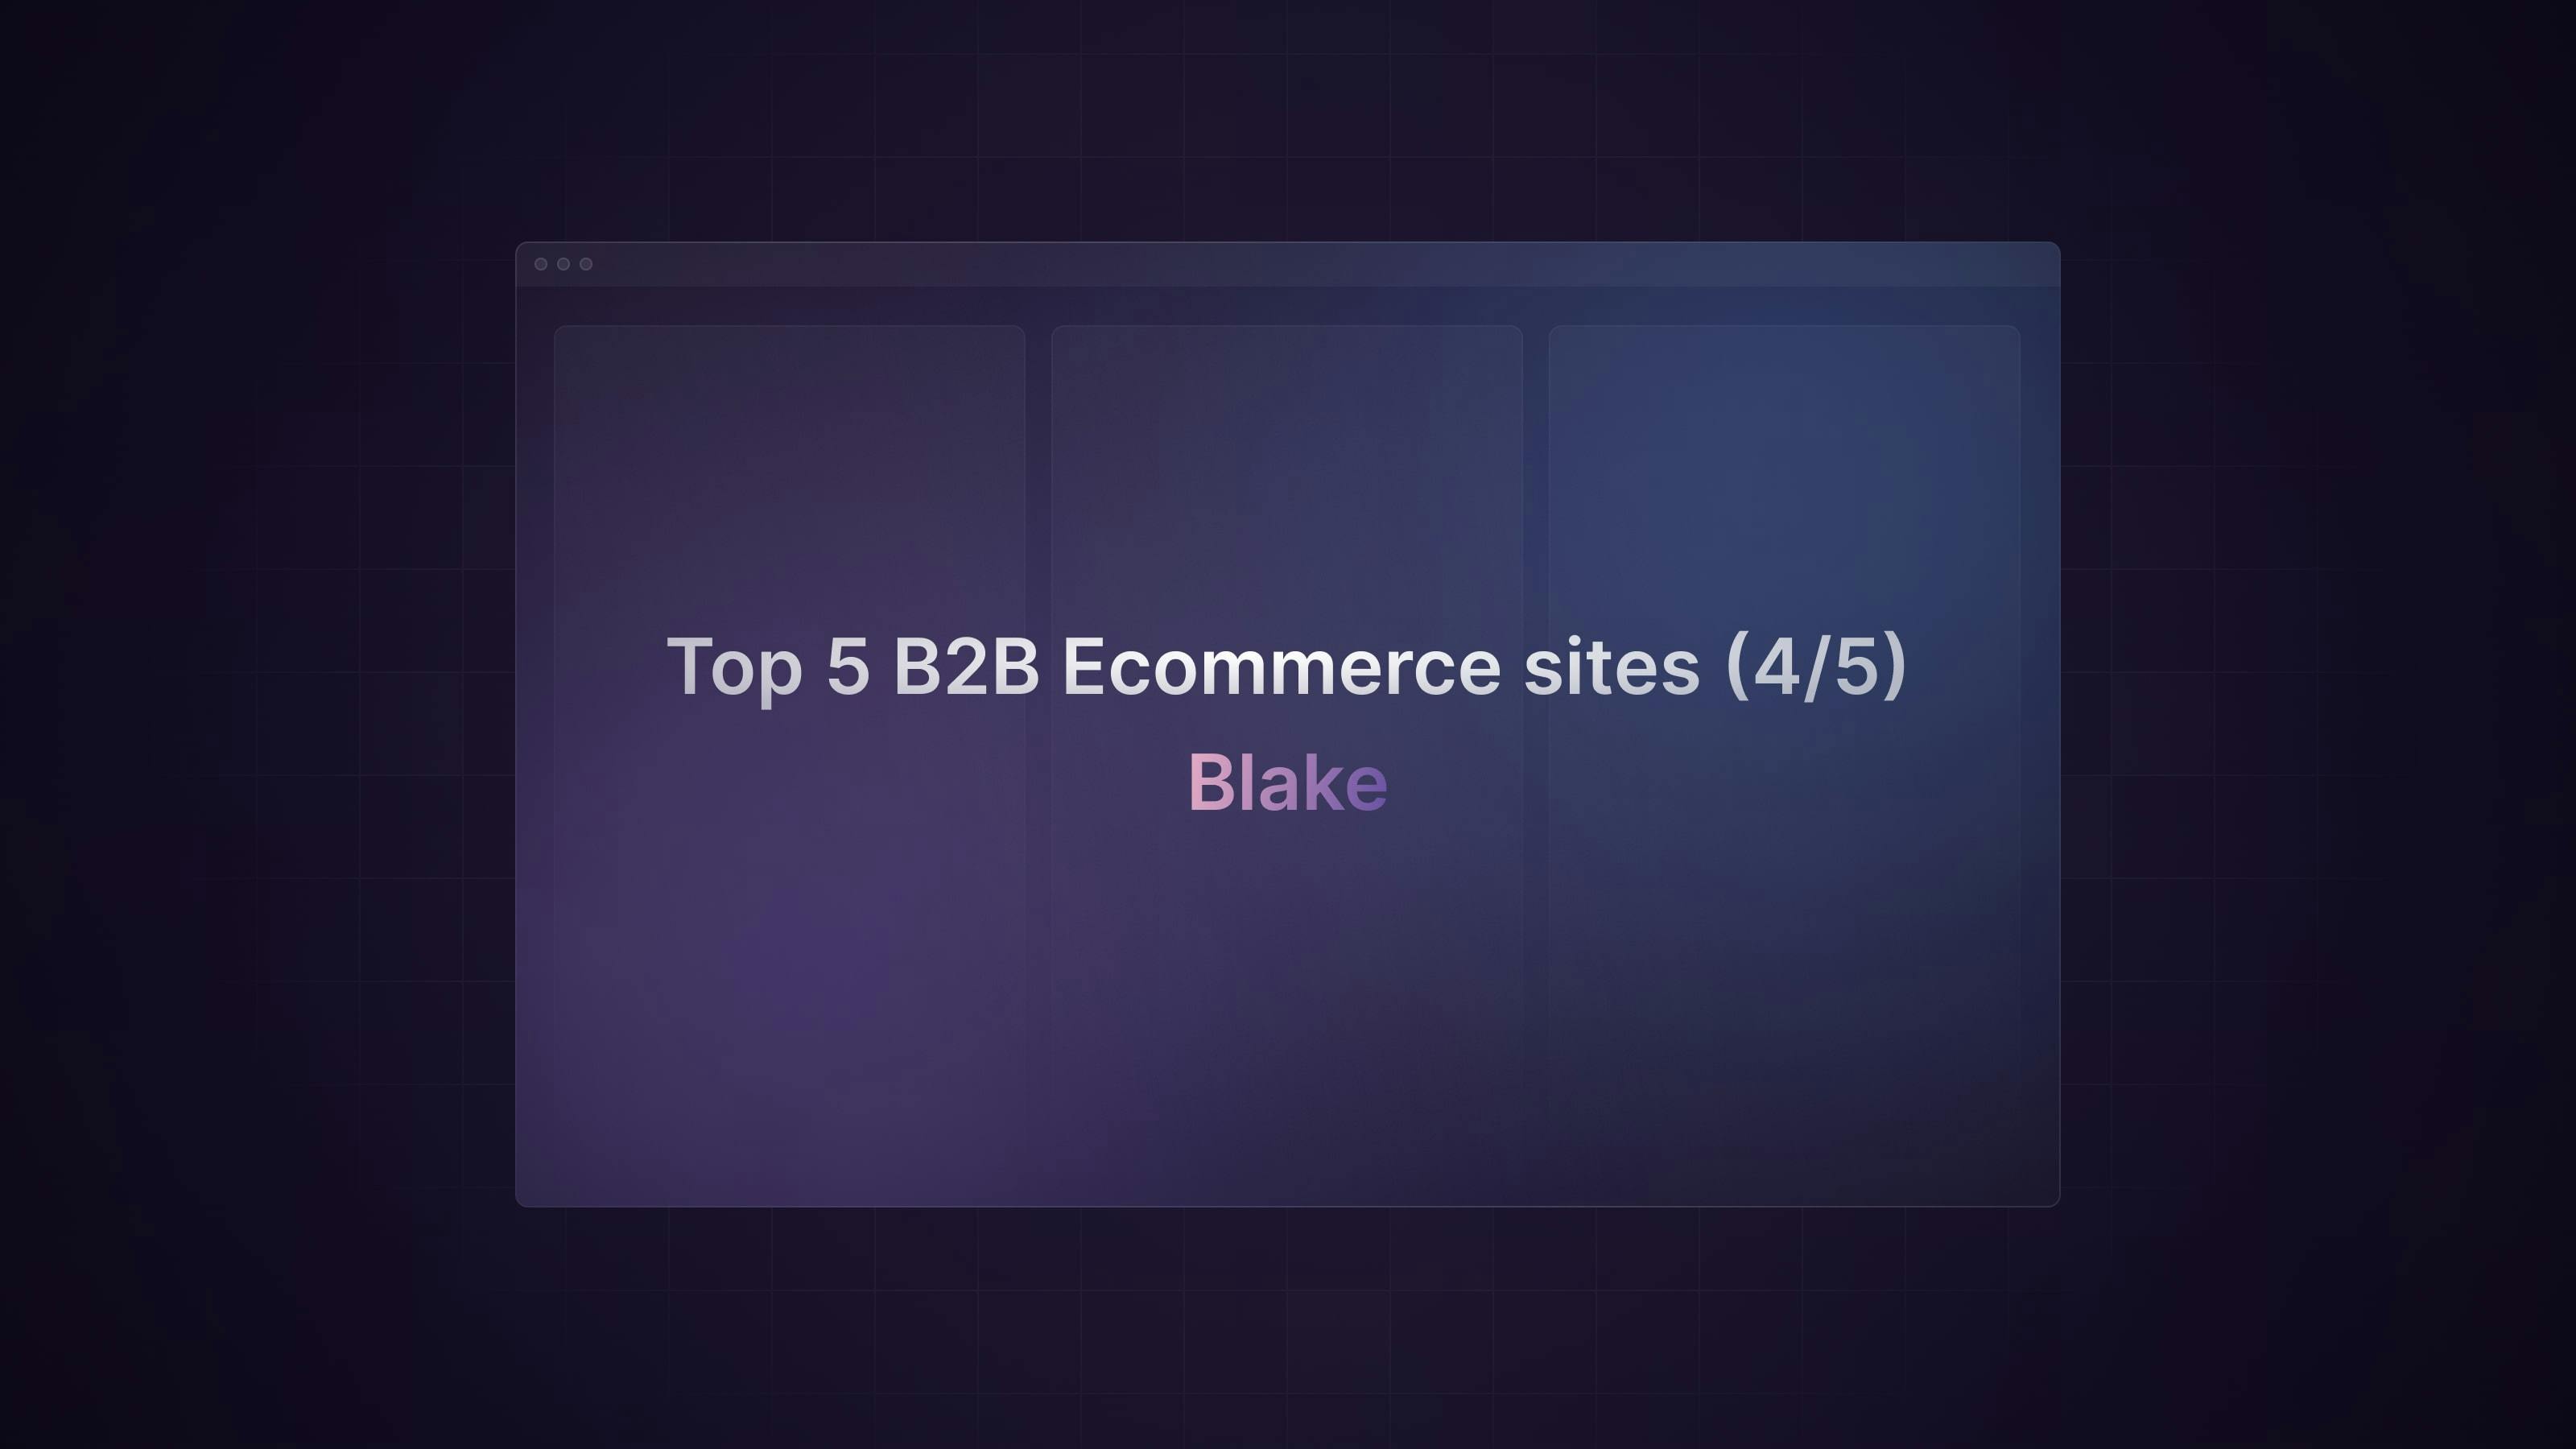 Top 5 B2B Ecommerce sites: Blake (4/5)